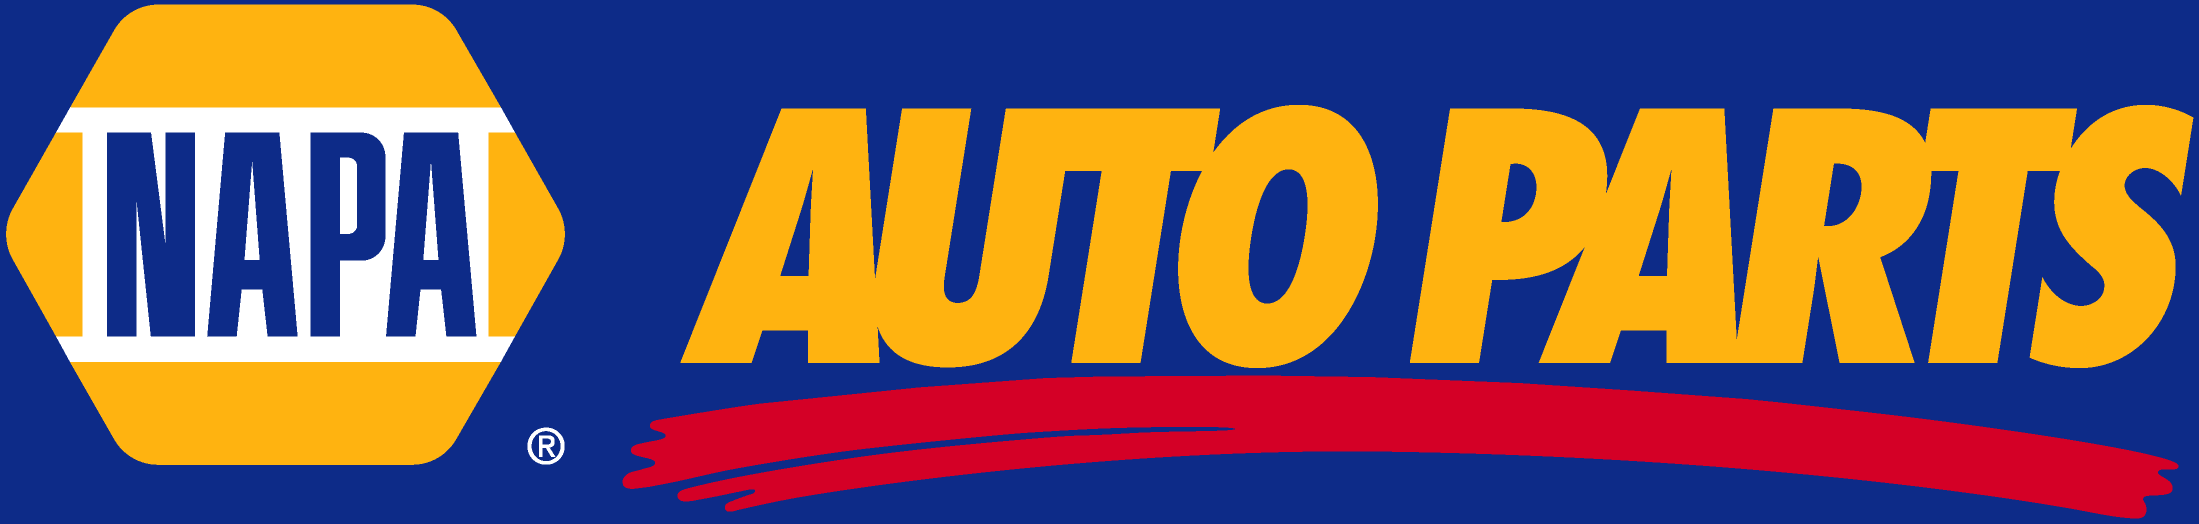 Napa Auto Parts Logo - Napa auto parts Logos